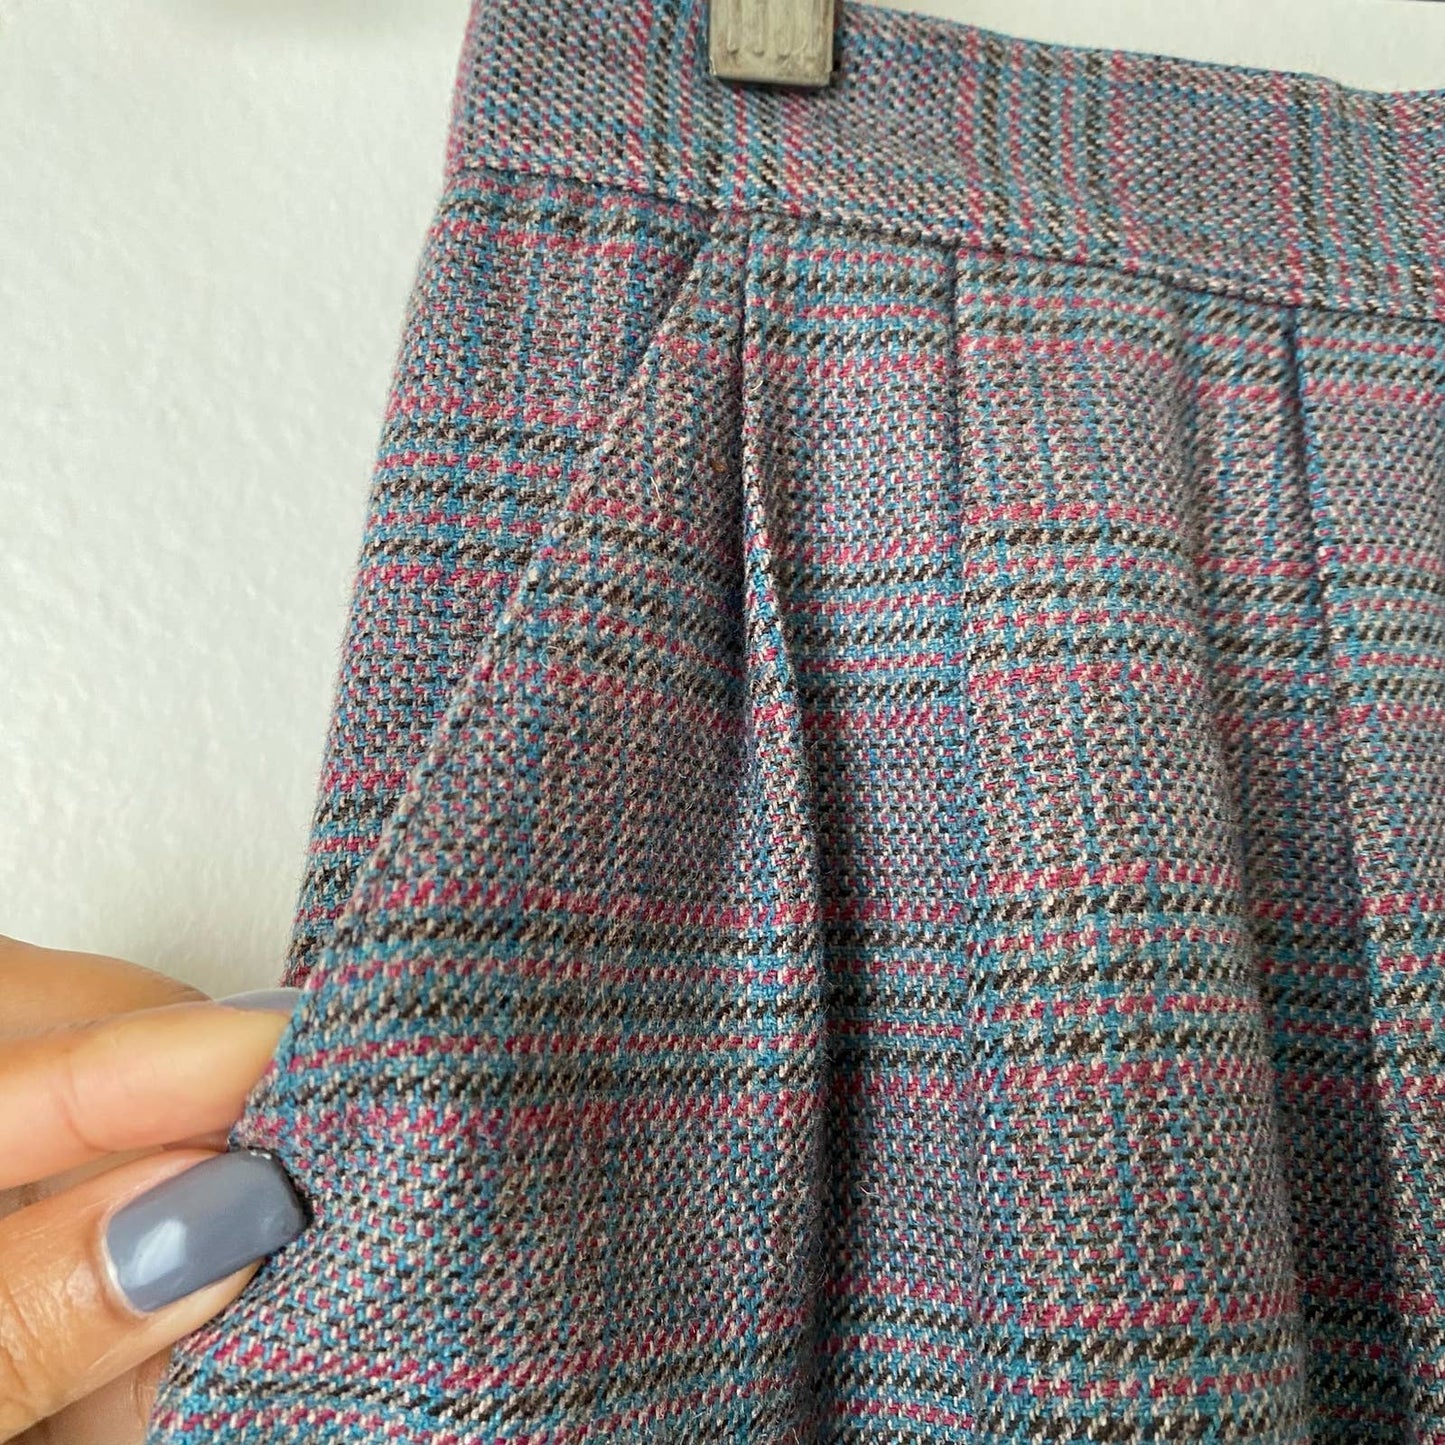 Glendora sz 7/8 VINTAGE plaid A-line vintage with pockets midi skirt